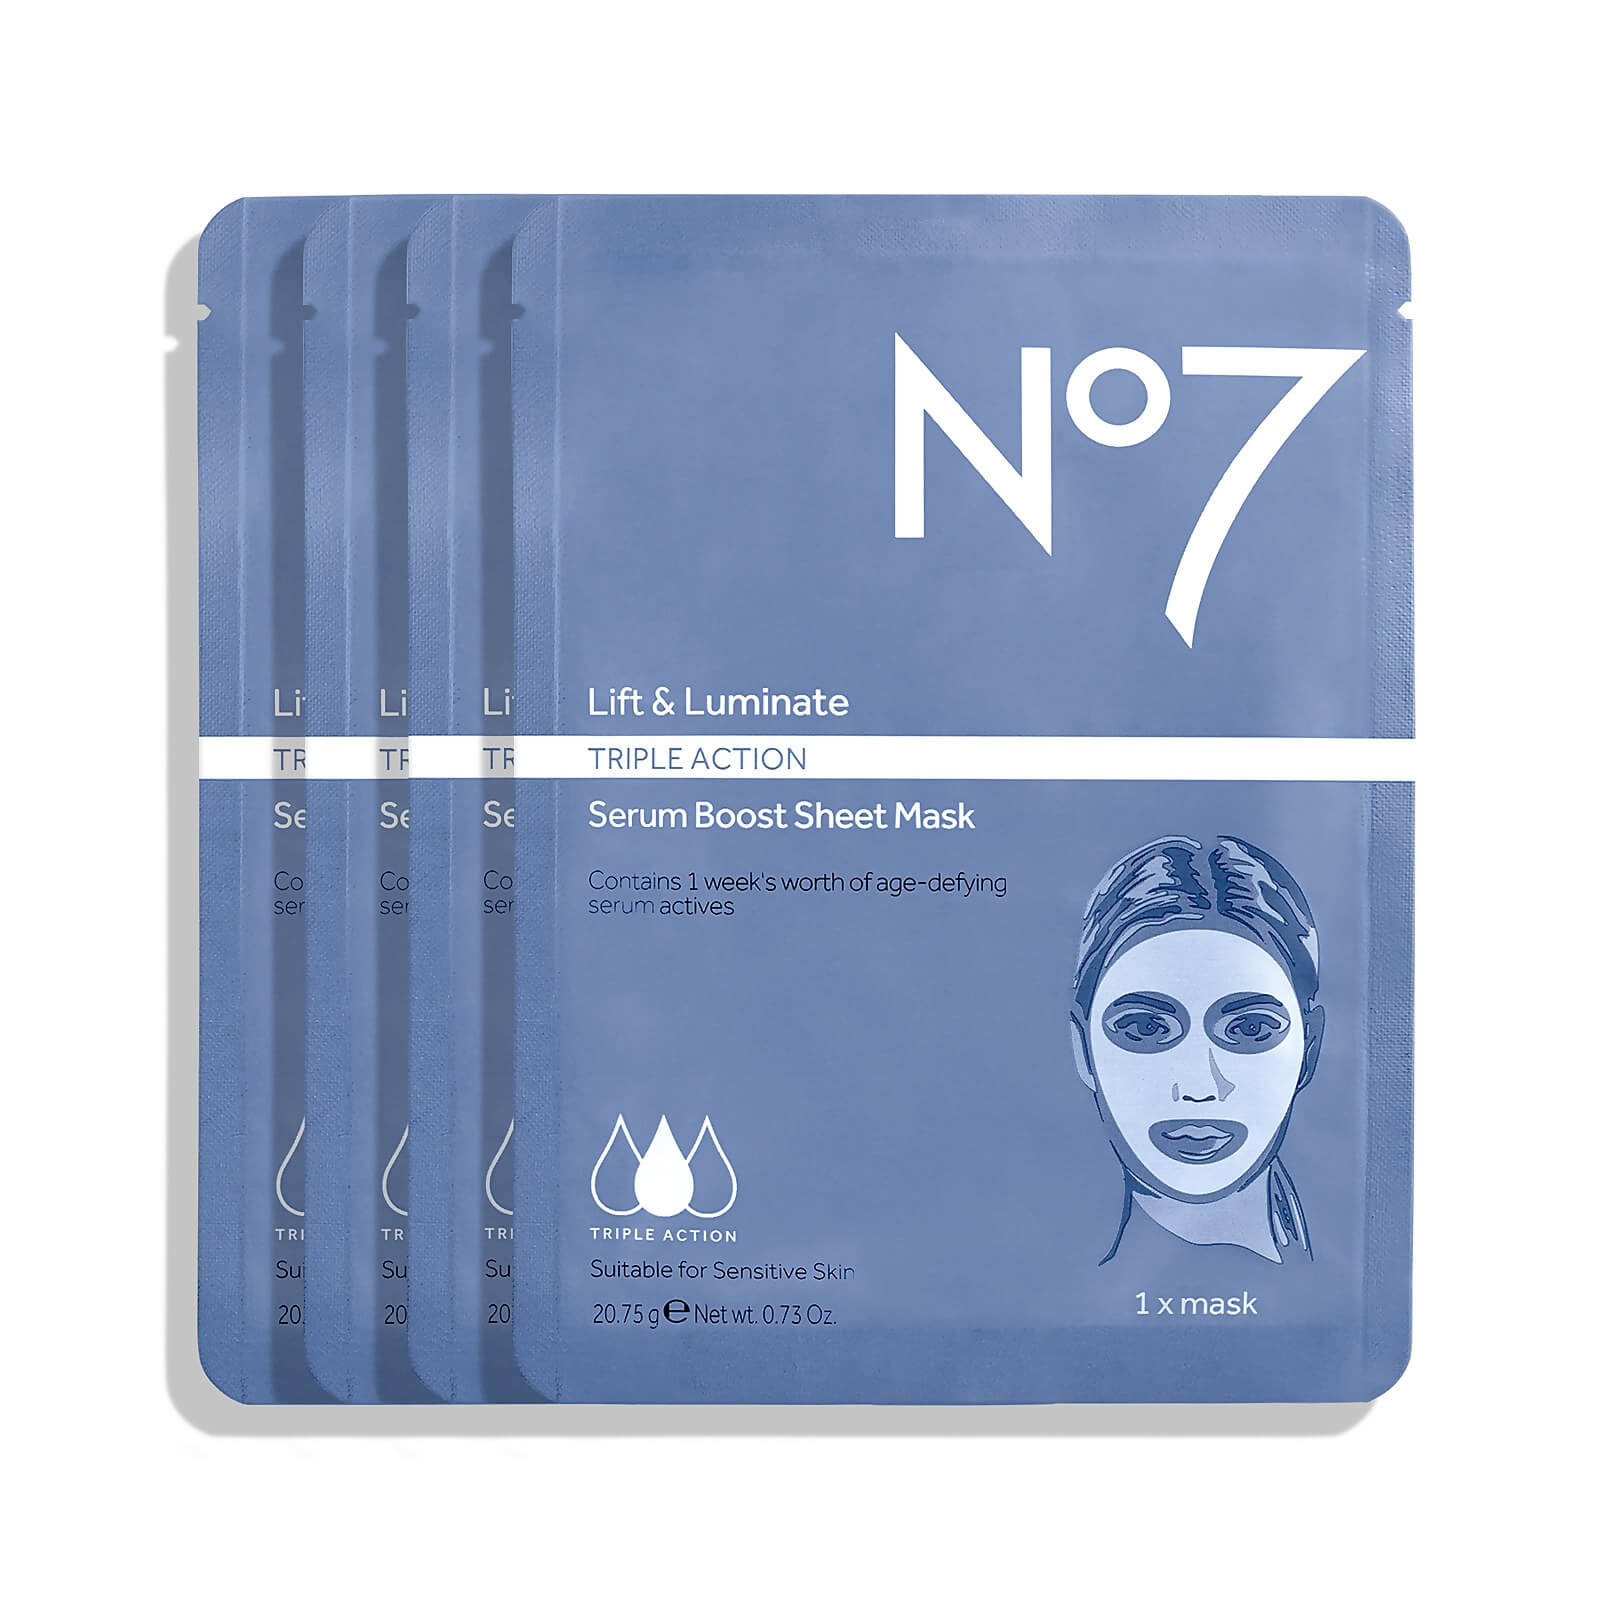 No7 Lift & Luminate Triple Action Serum Boost Sheet Mask (4 Pack)